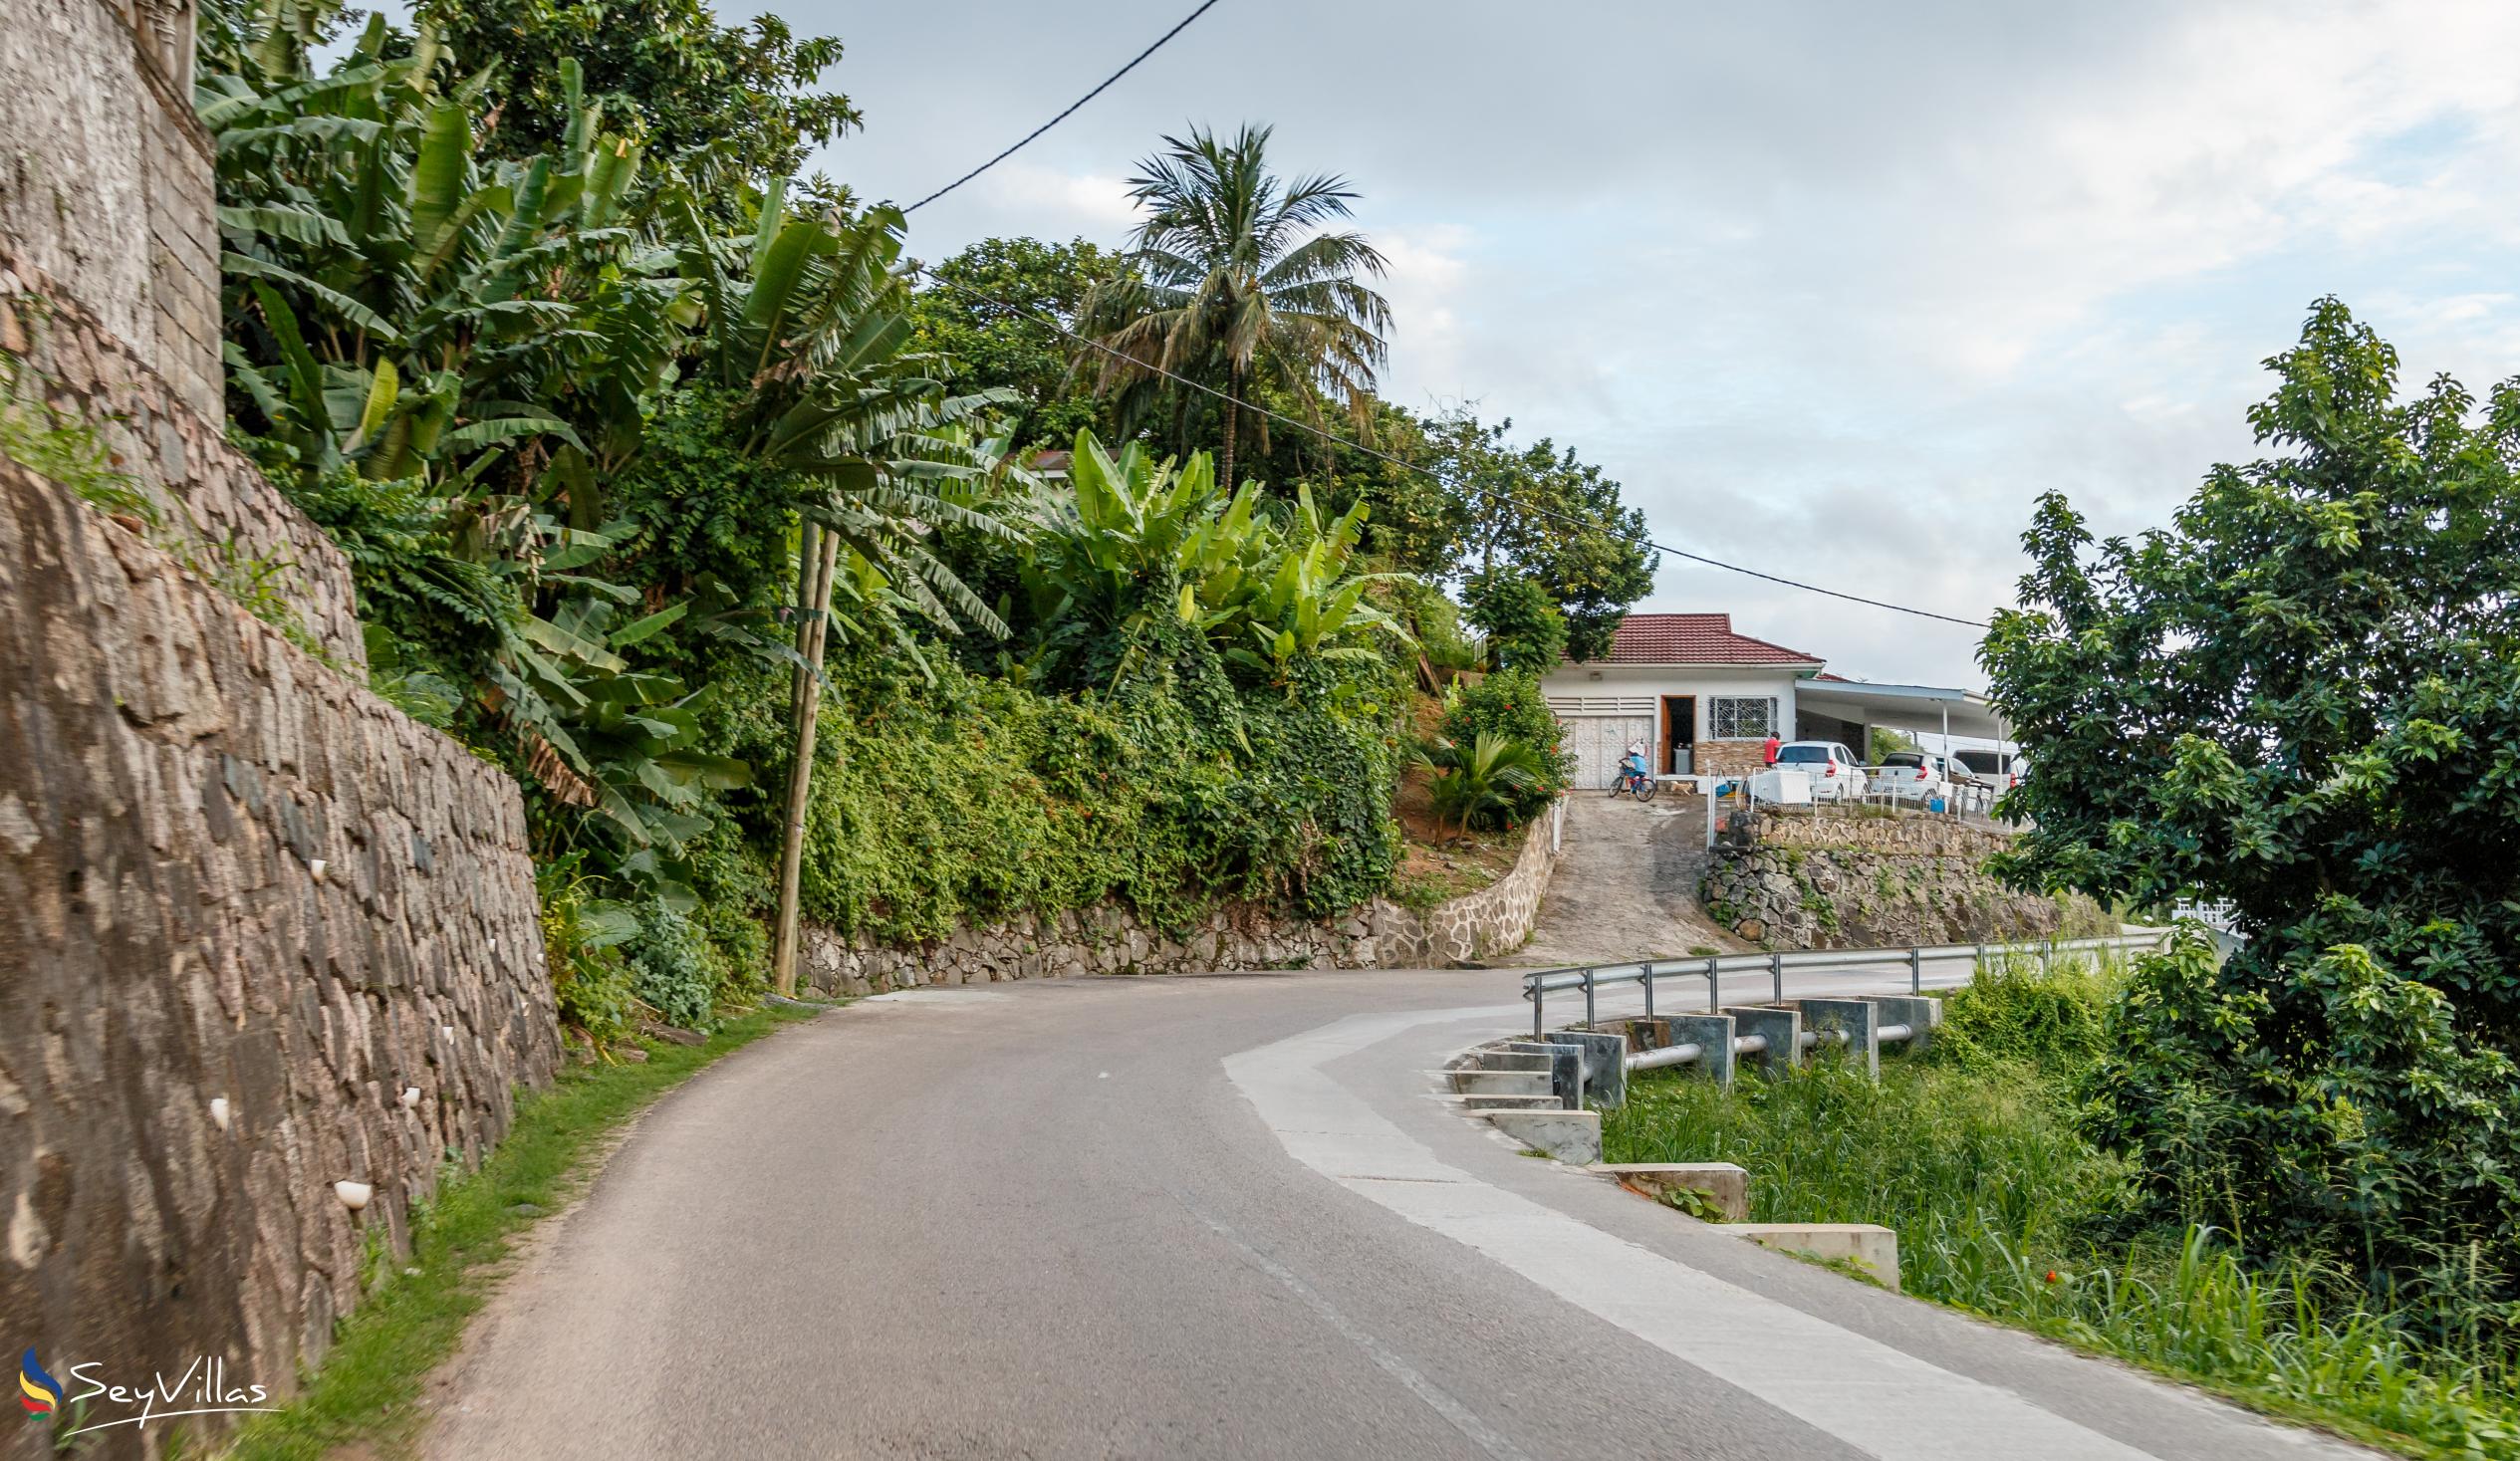 Foto 33: Takamaka Green Village - Posizione - Mahé (Seychelles)